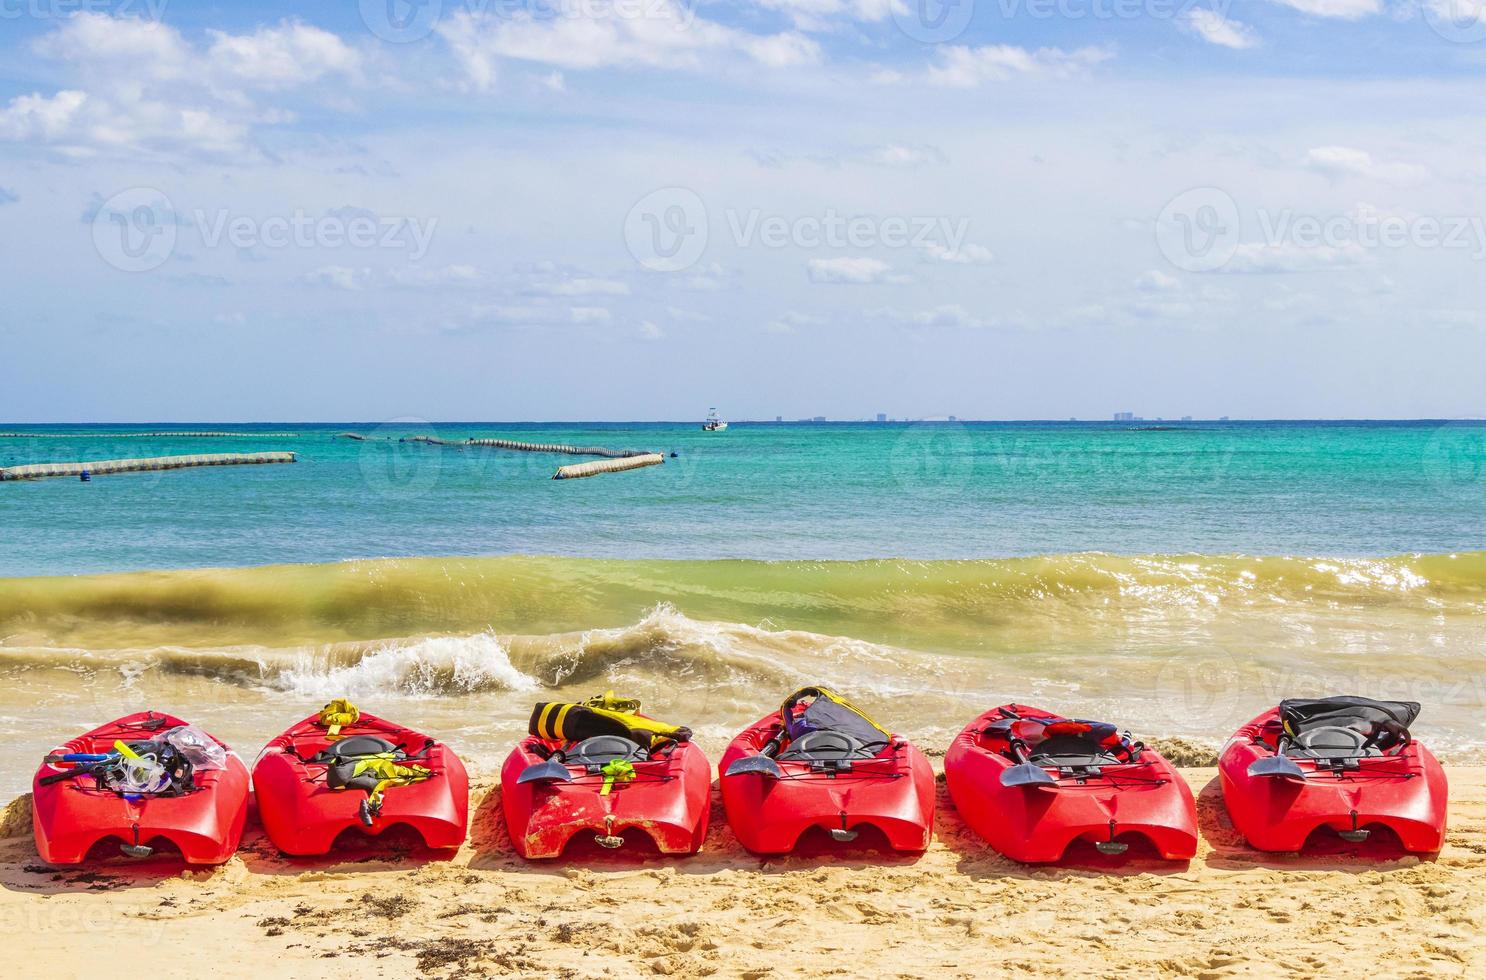 rode kano's bij tropisch strandpanorama playa del carmen mexico. foto